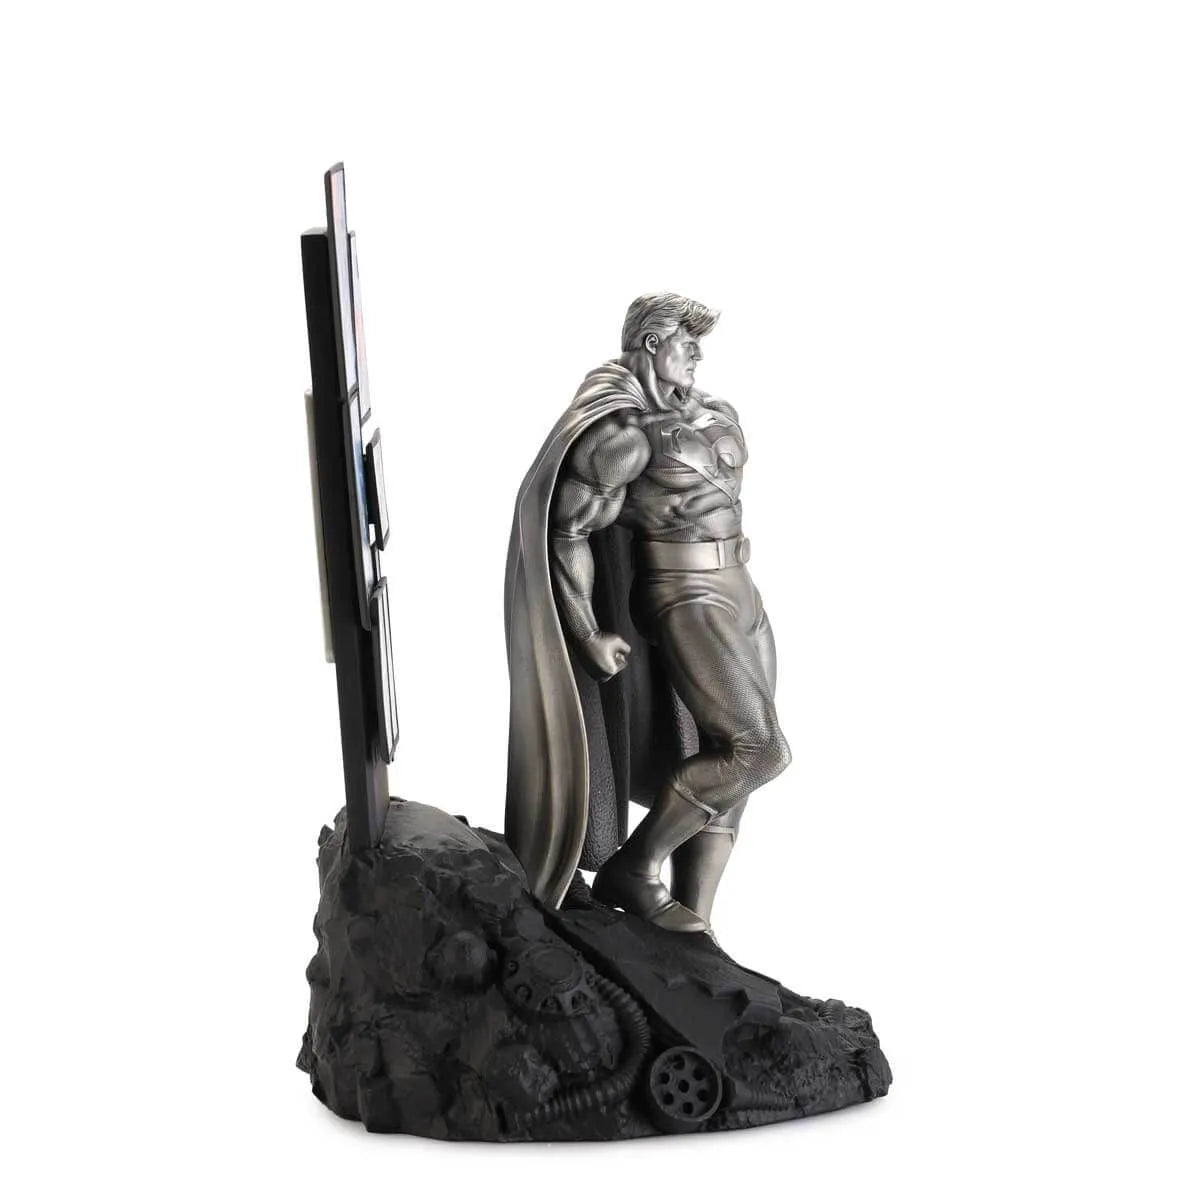 Superman The Dark Knight Returns Limited Edition Metal Figurine by Royal Selangor -Royal Selangor - India - www.superherotoystore.com